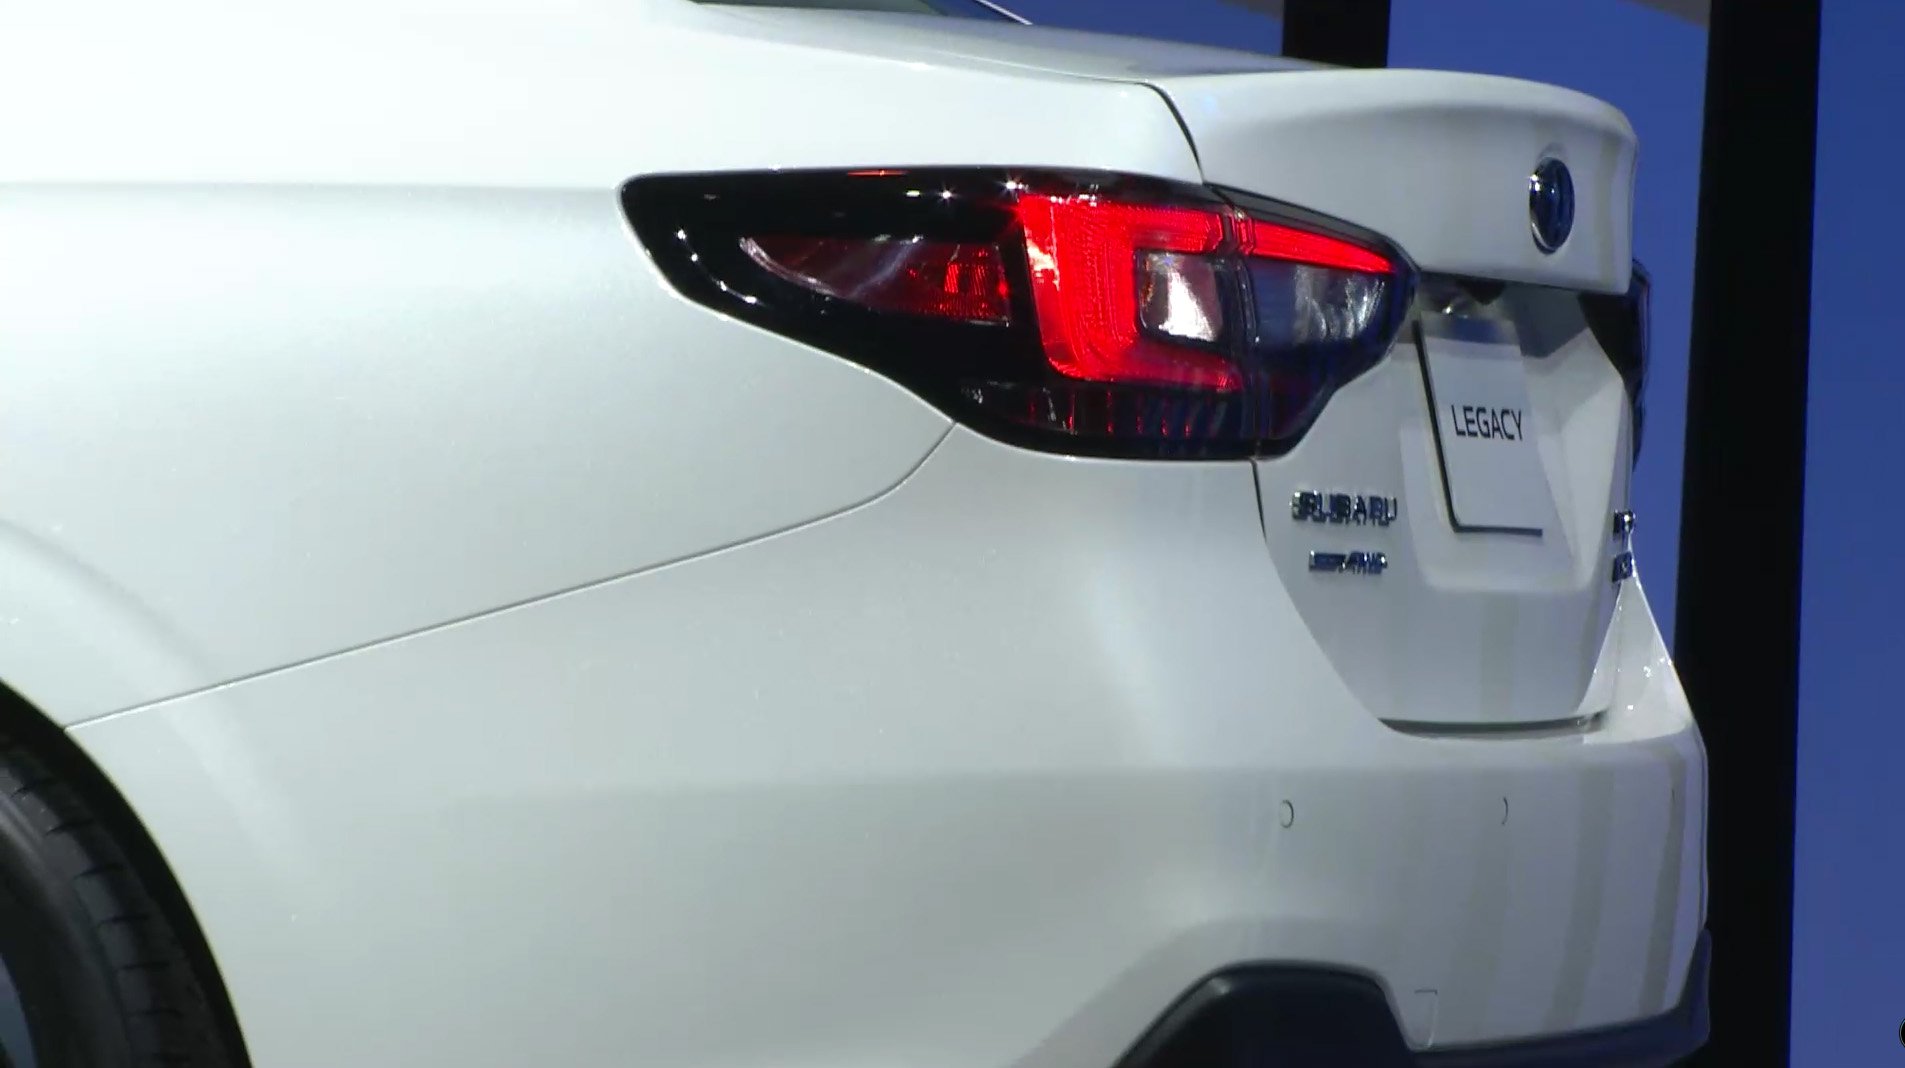 2020 Subaru Legacy resim galerisi (07.02.2018)